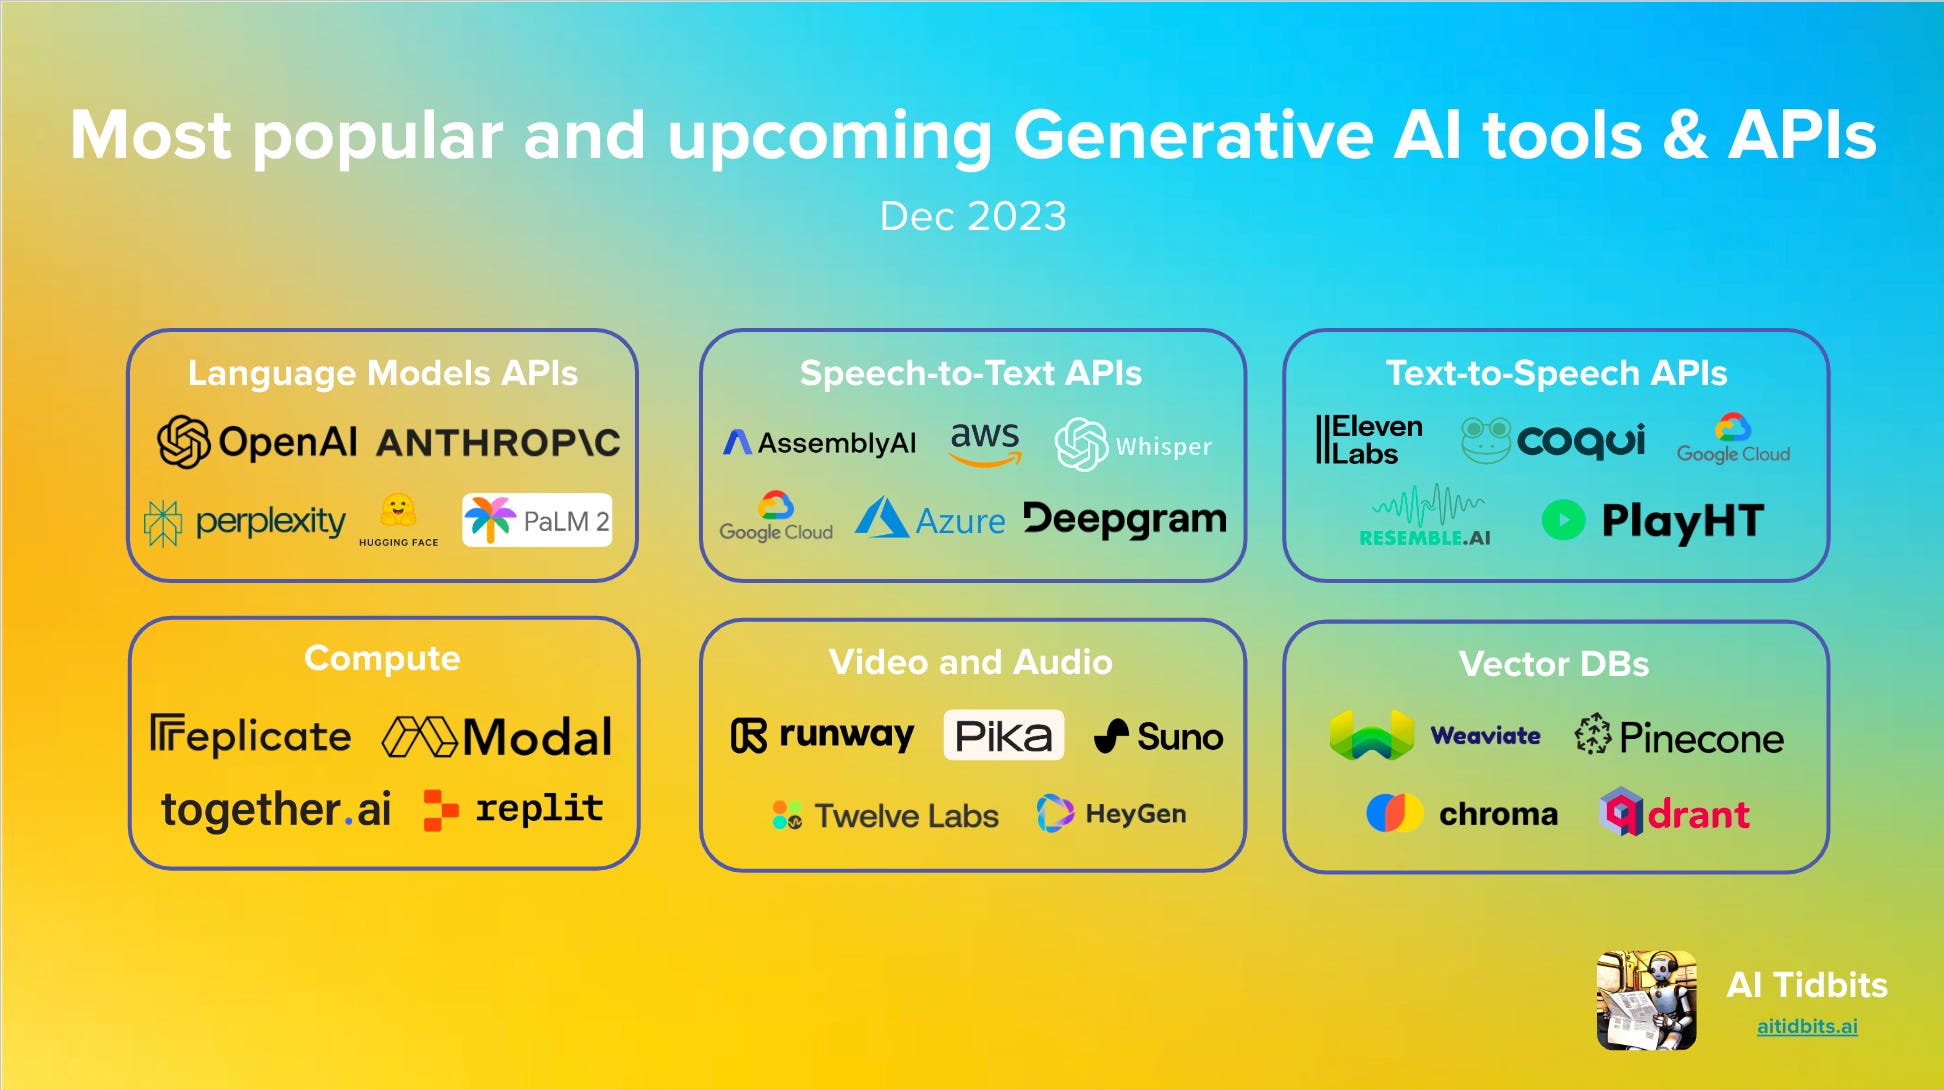 MAS Releases AI Toolkit